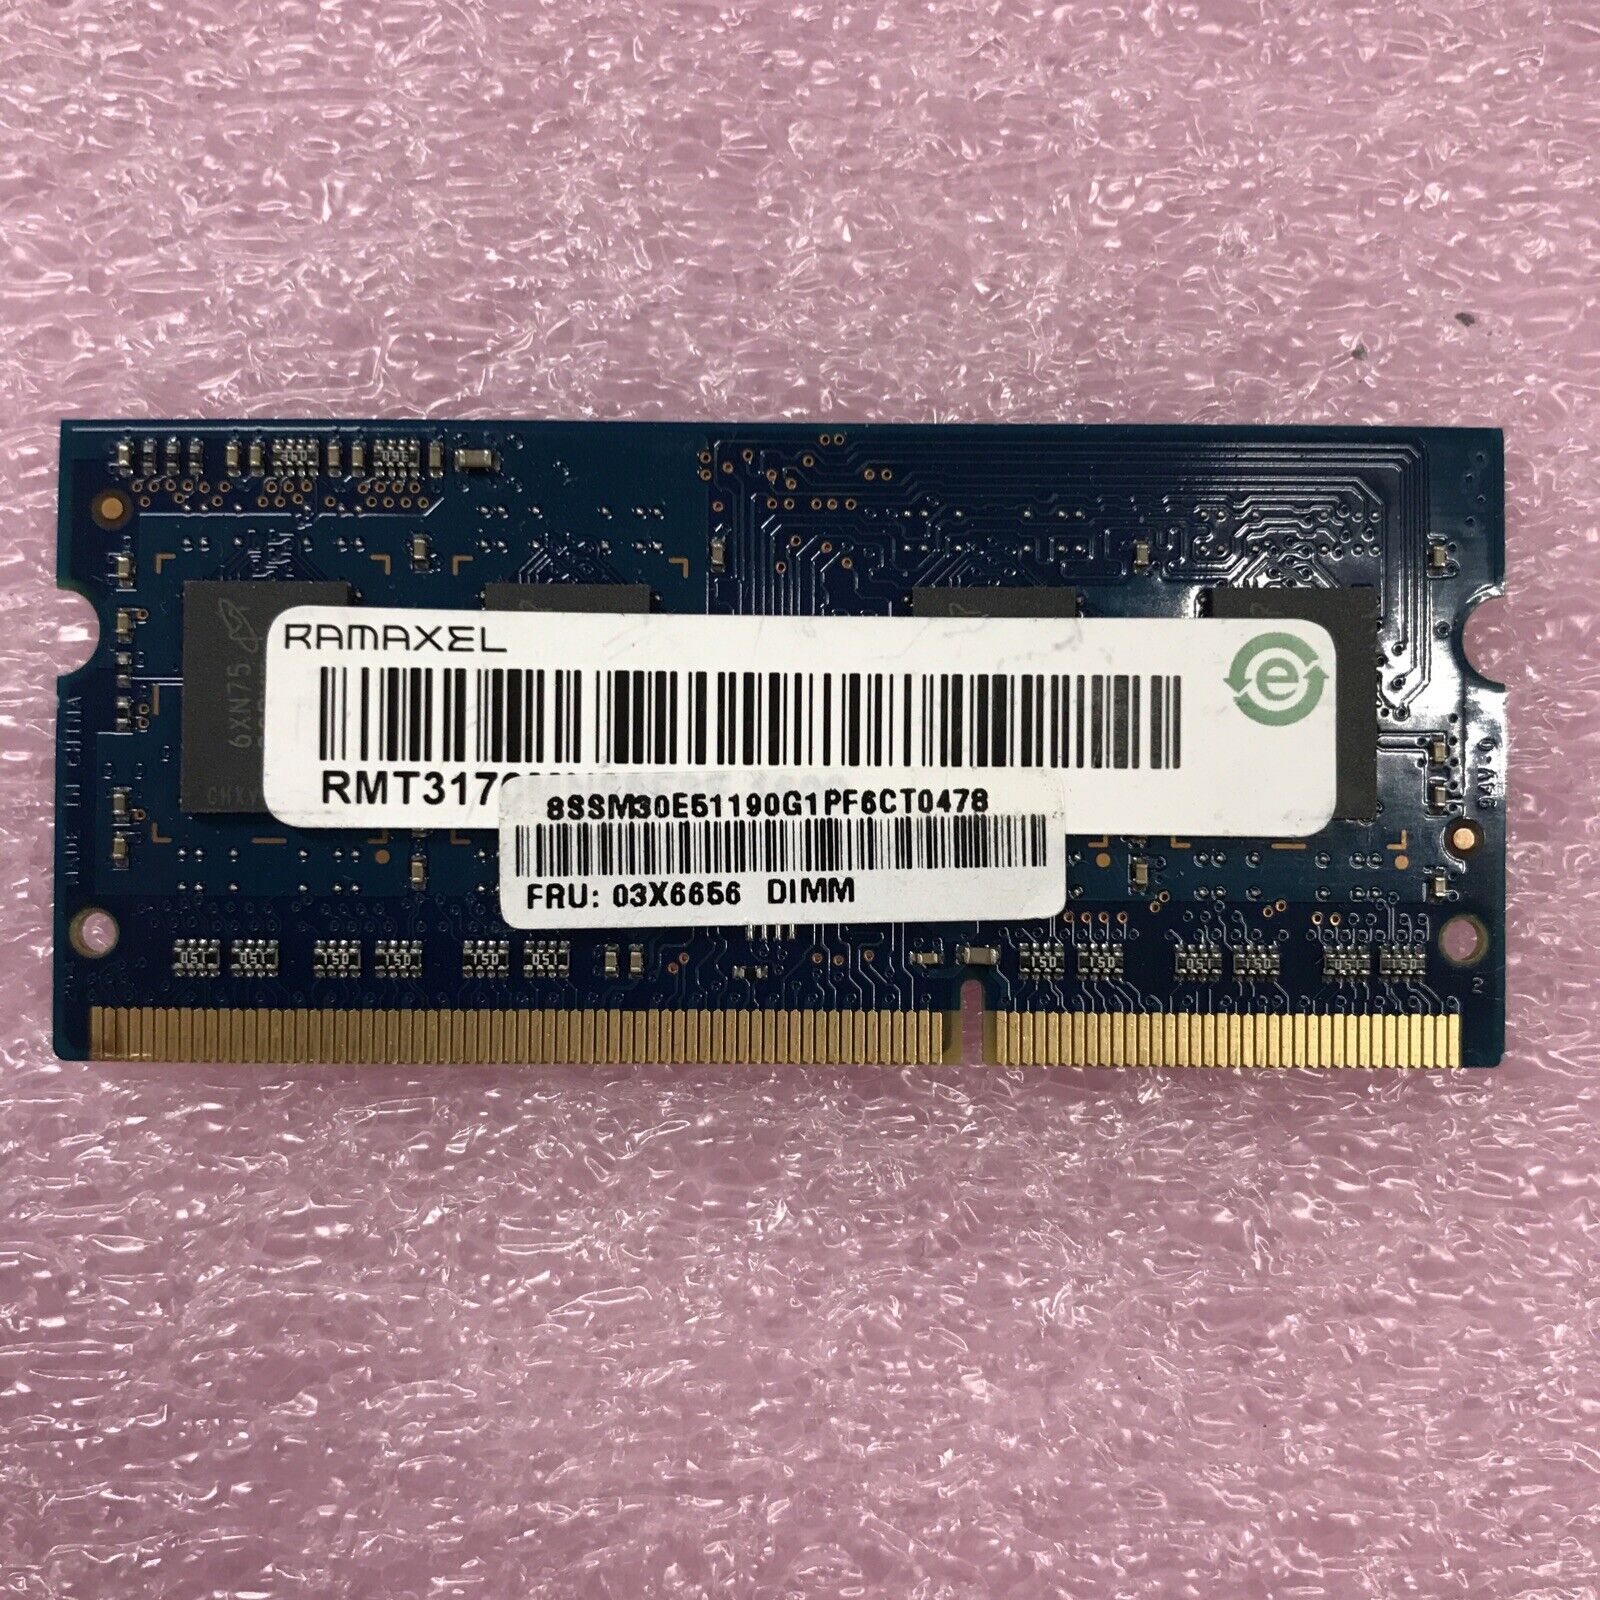 Ramaxel 8GB Kit 2x4GB 1Rx8 PC3L-12800S-11-13-B4 Laptop Memory RMT3170MN68F9F